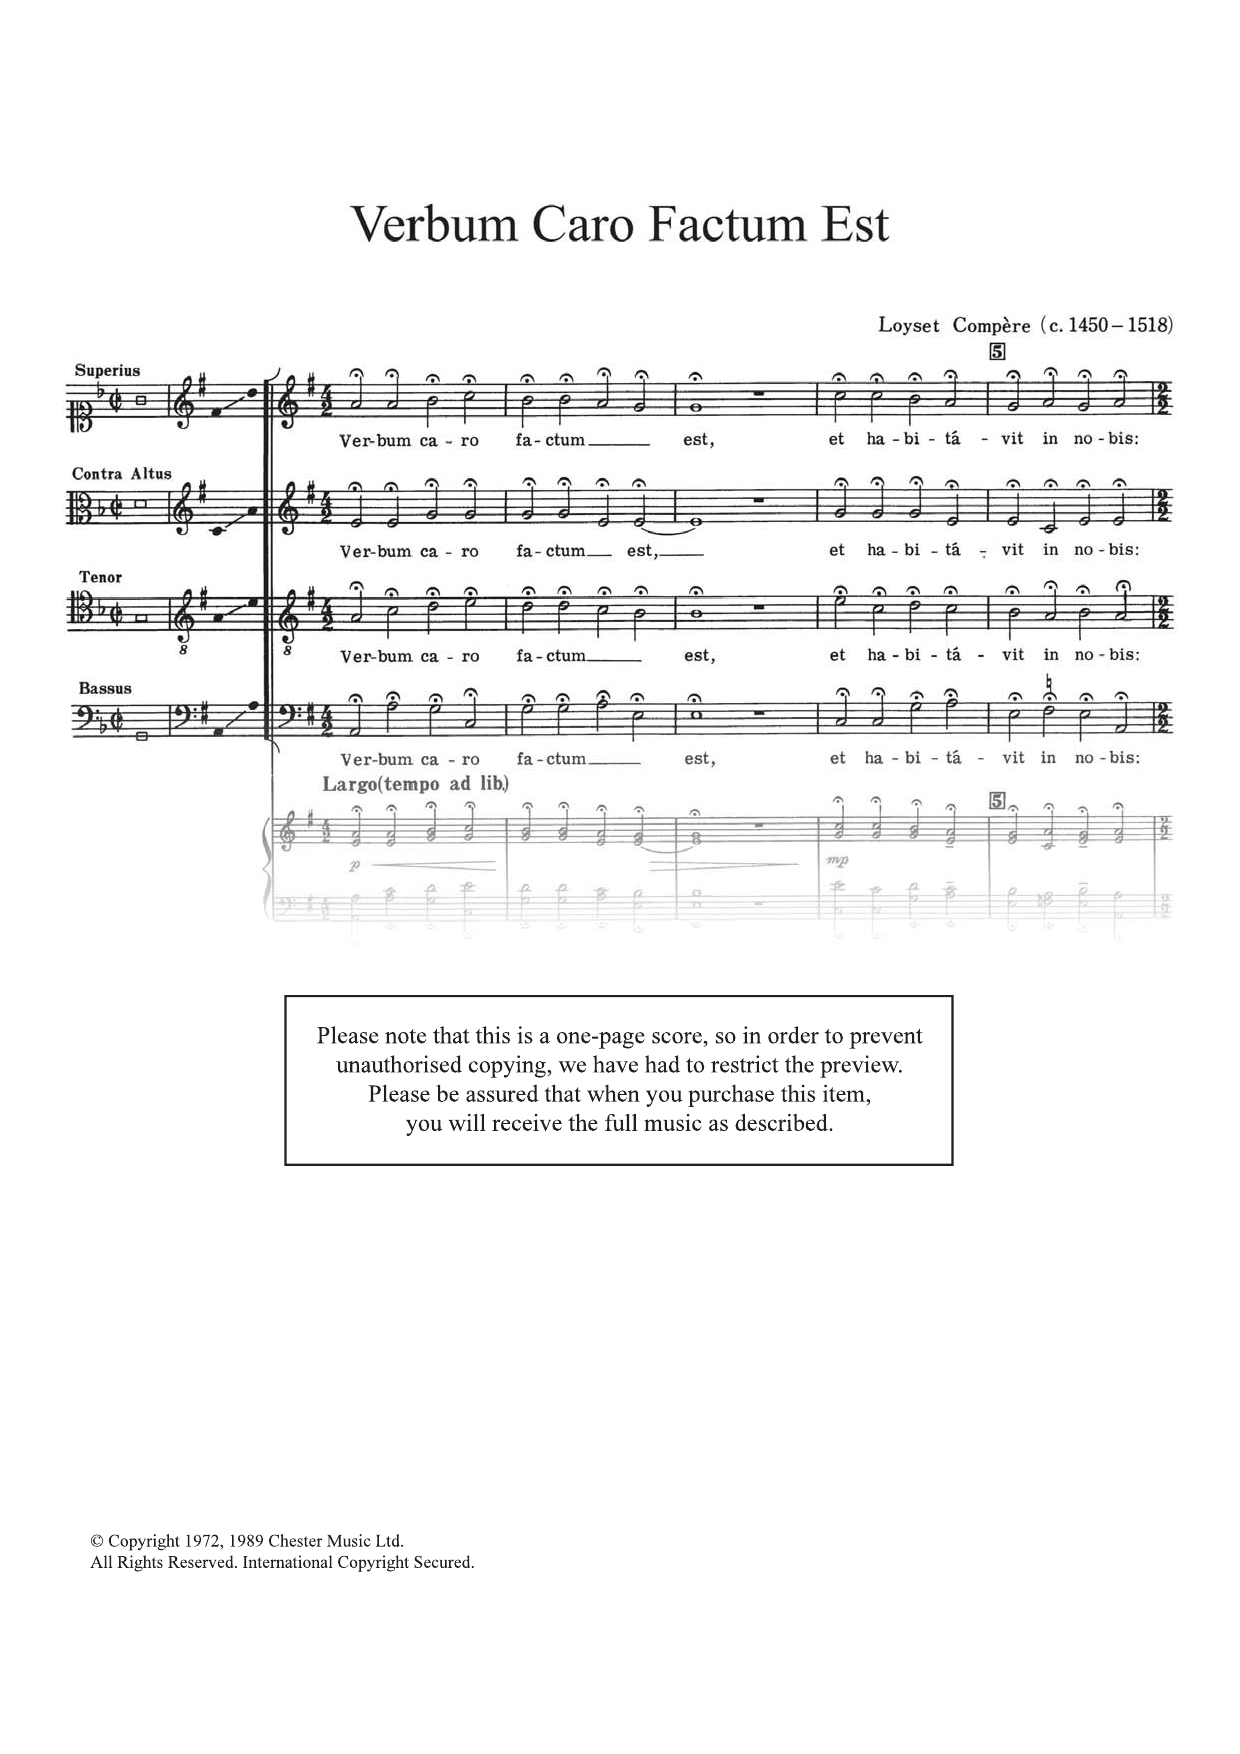 Loyset Compere Verbum Caro Factum Est Sheet Music Notes & Chords for SATB - Download or Print PDF